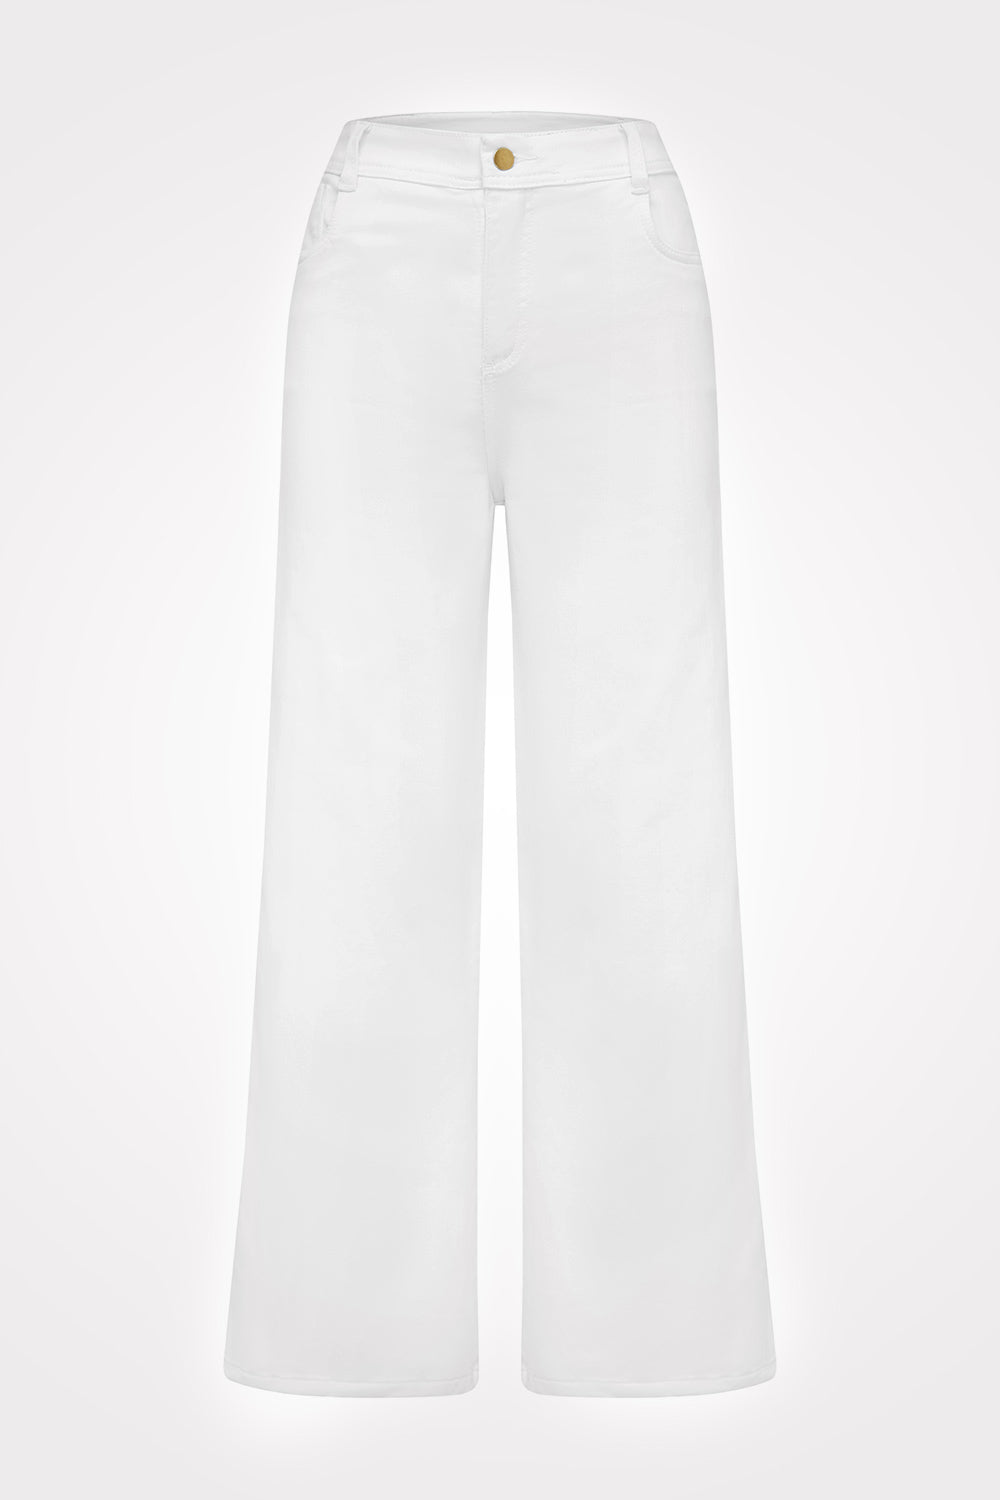 Alyssa Wide Leg Jeans Denim White Pants